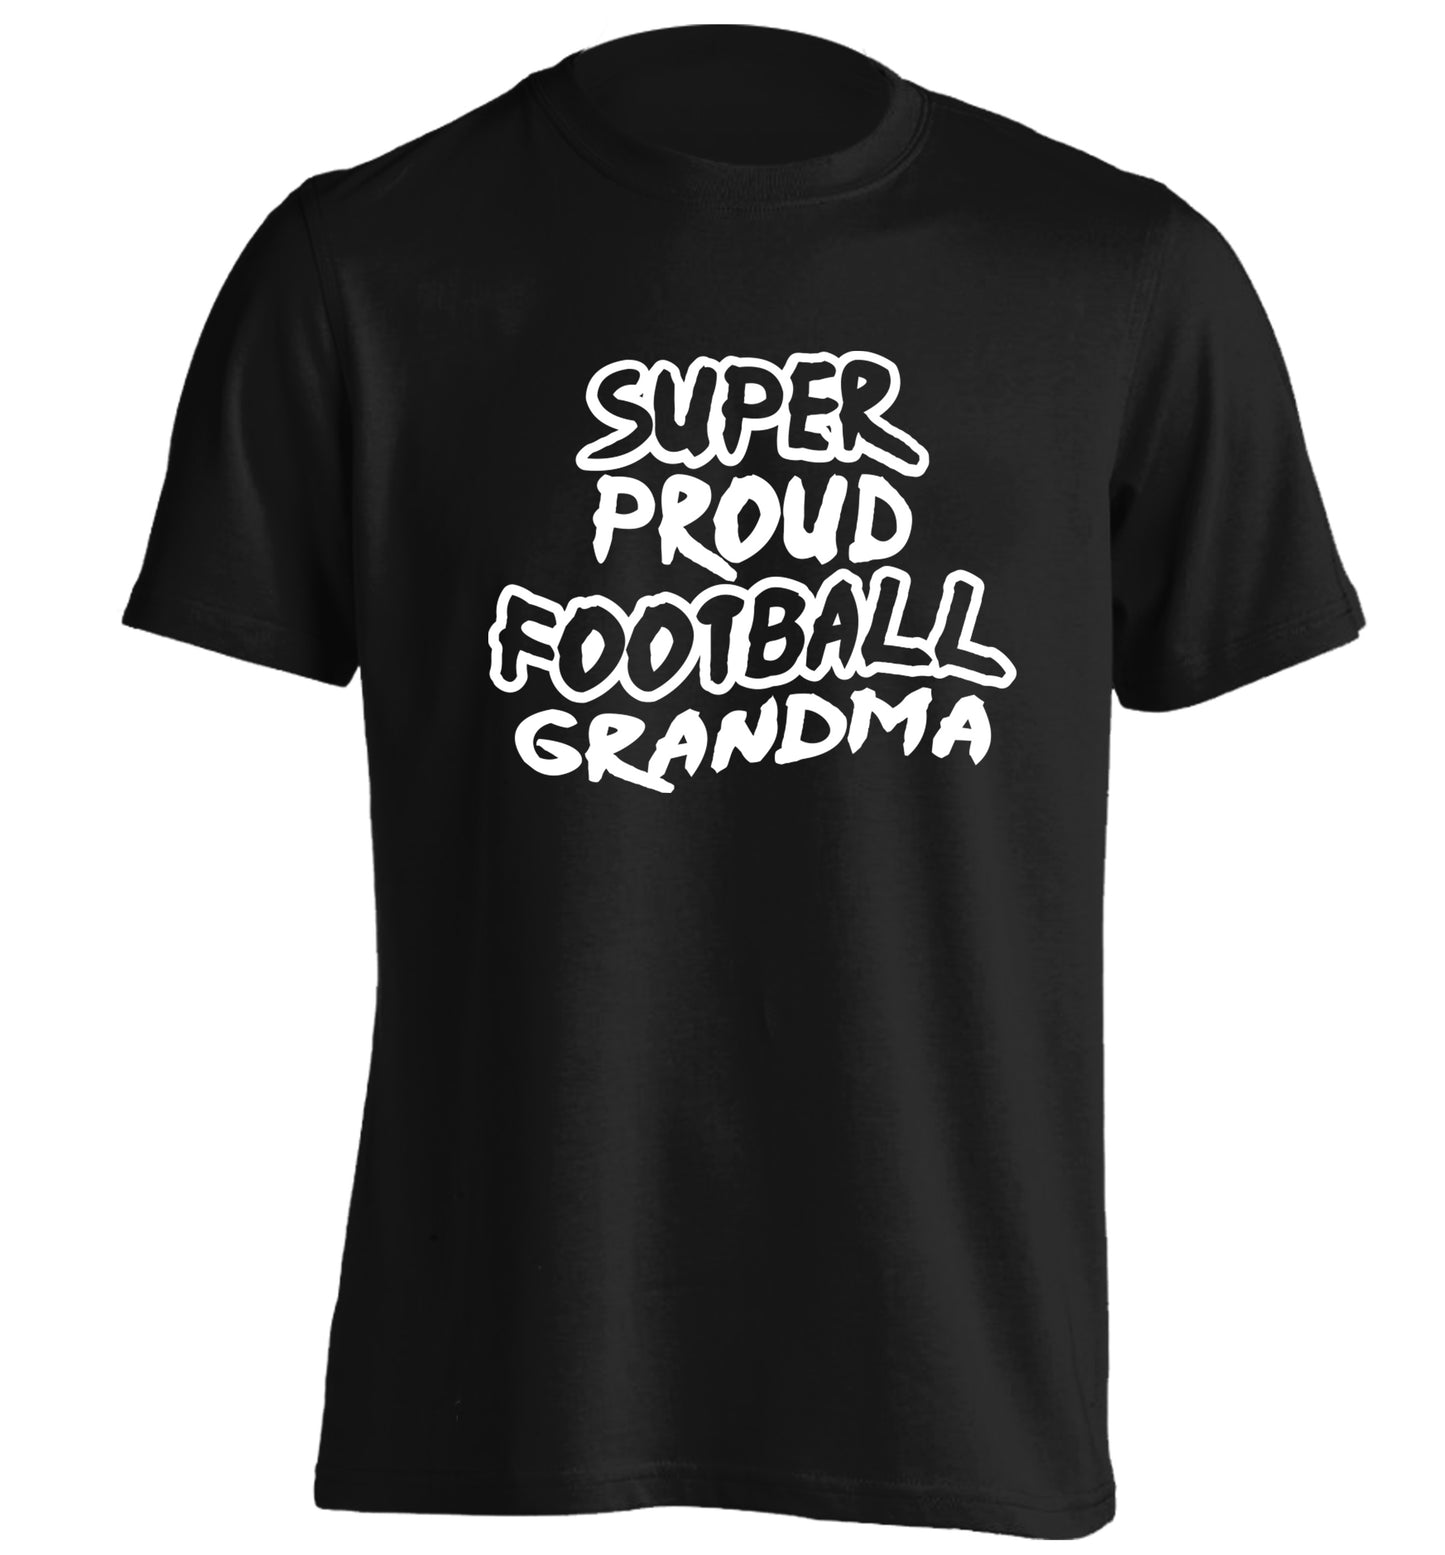 Super proud football grandma adults unisexblack Tshirt 2XL